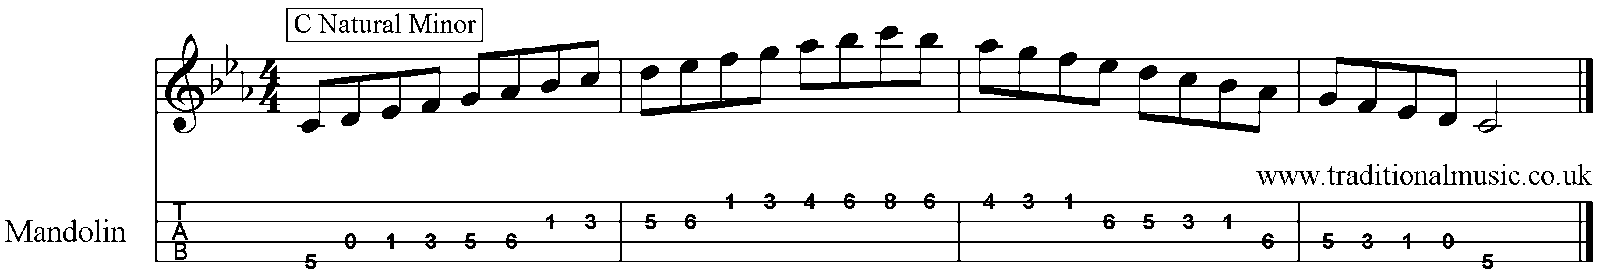 Minor Scales for Mandolin C 